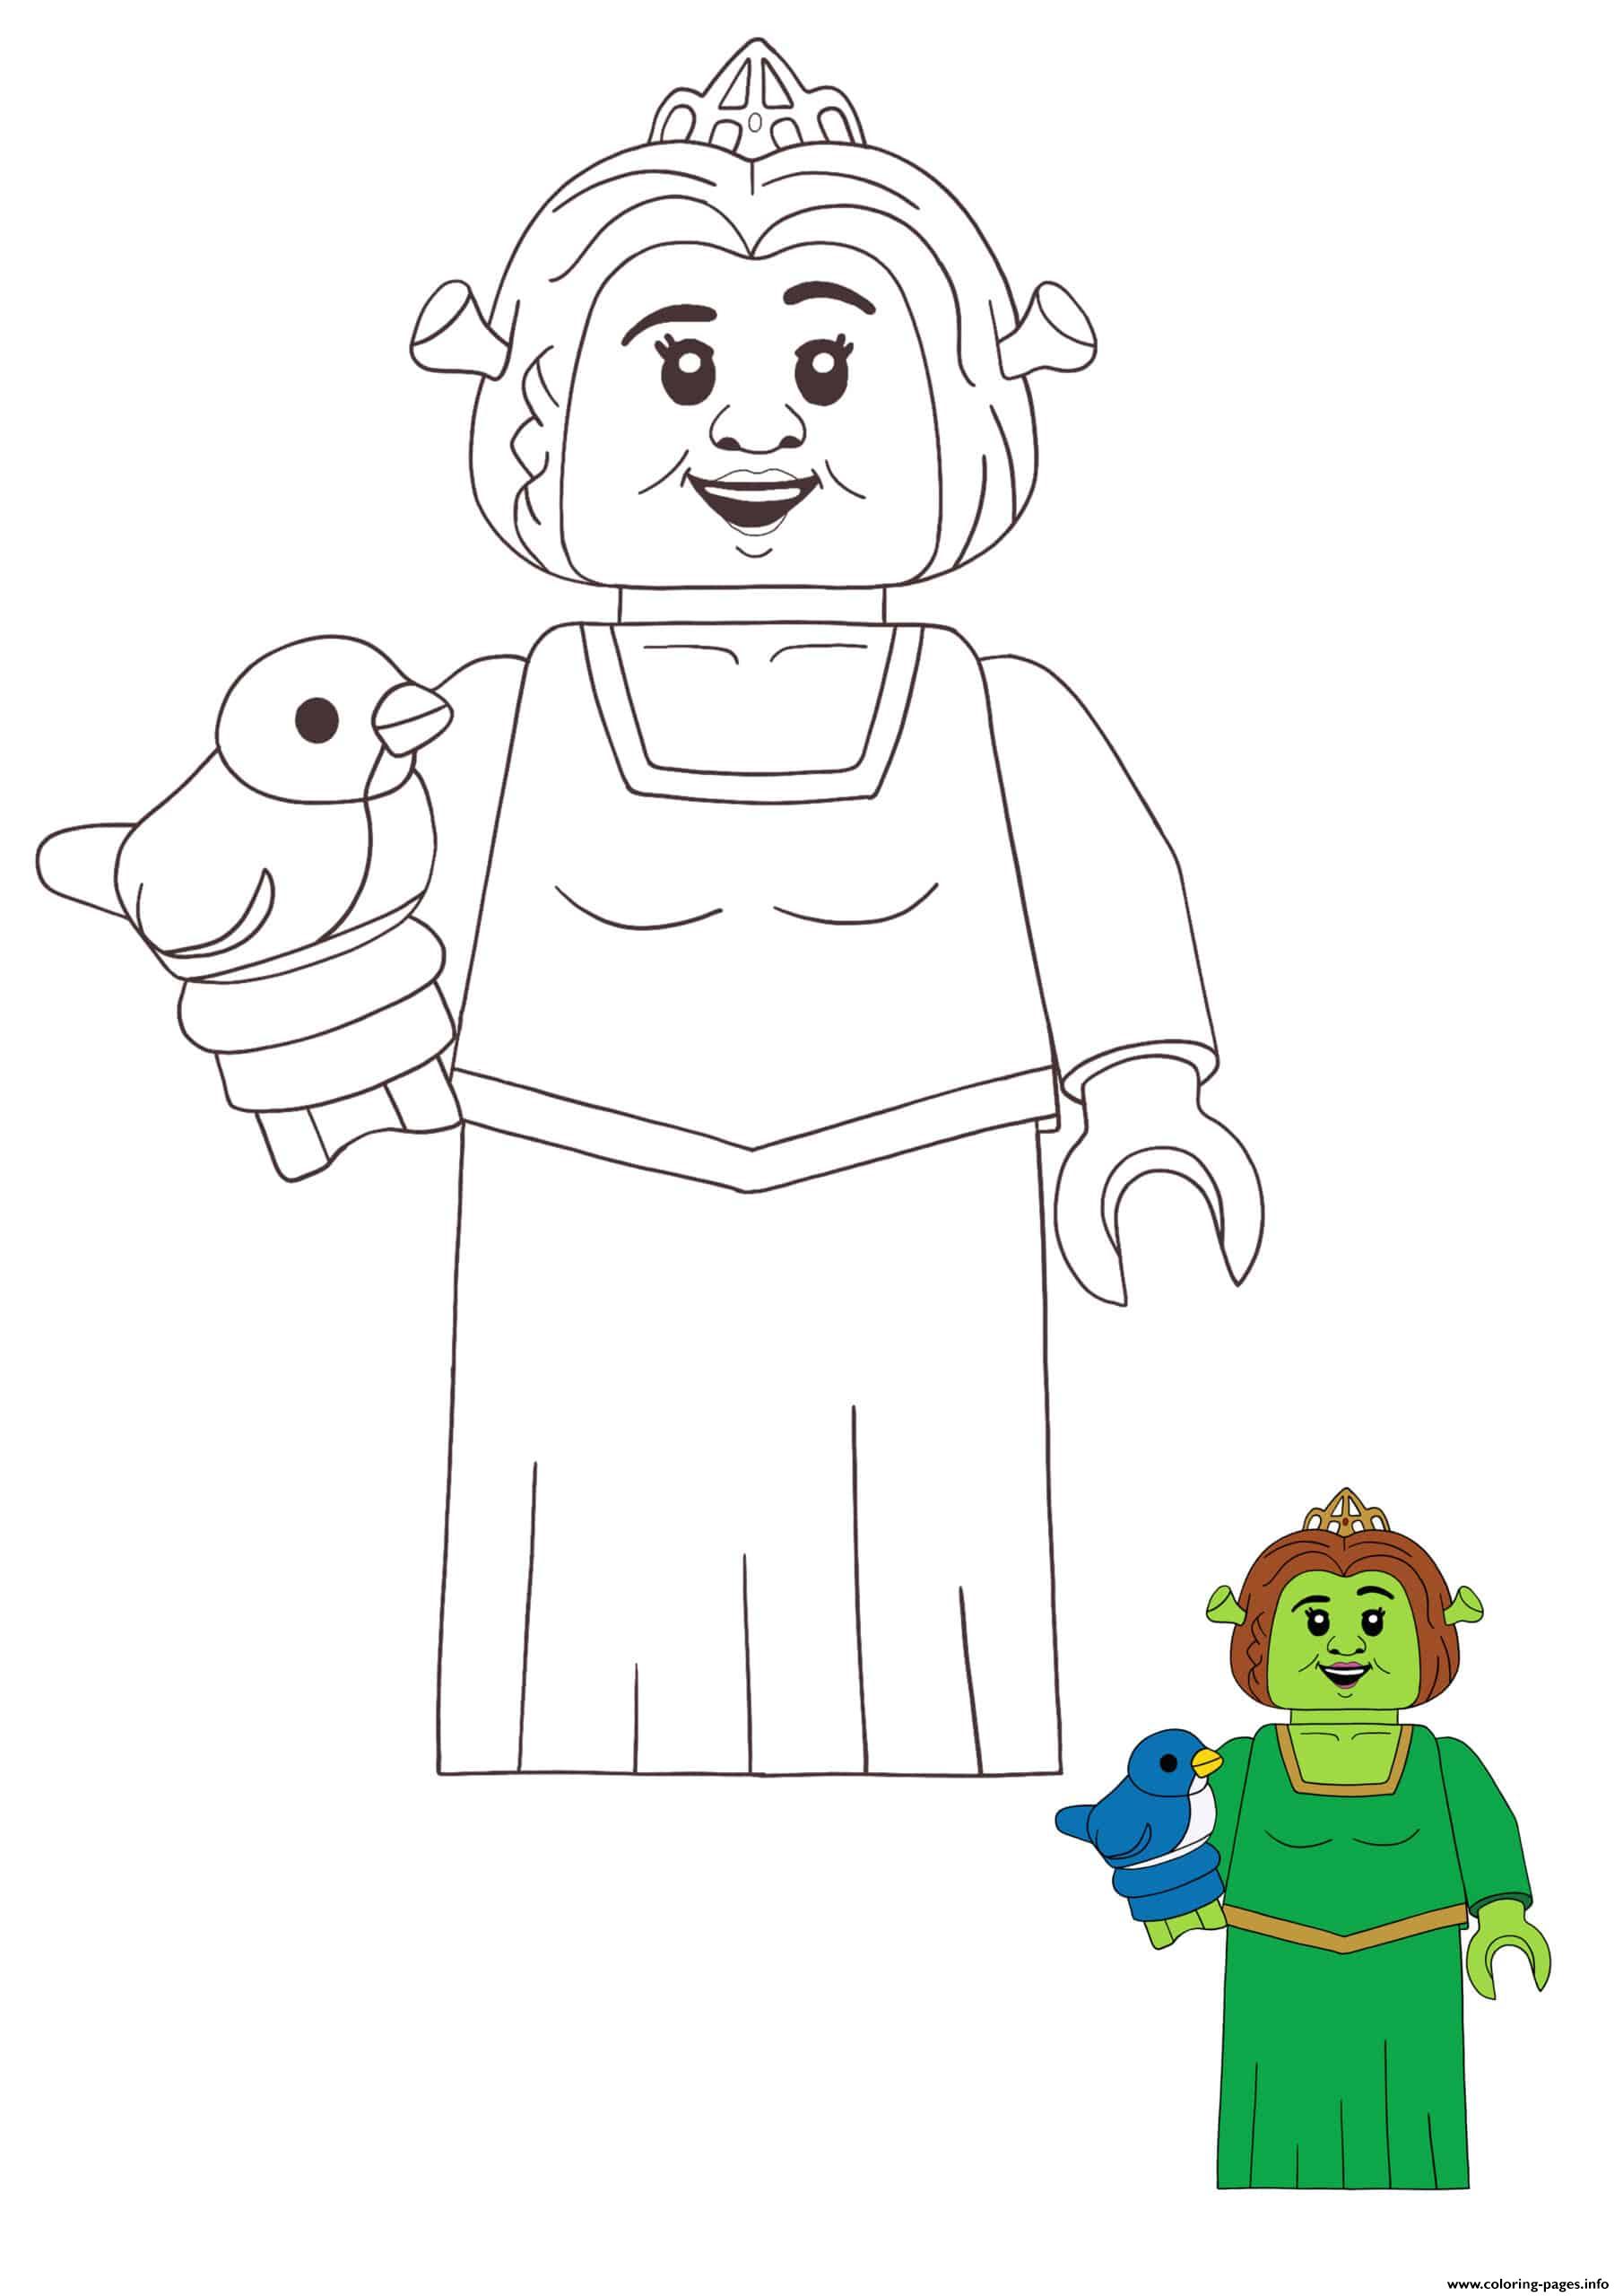 Lego Princess Fiona coloring